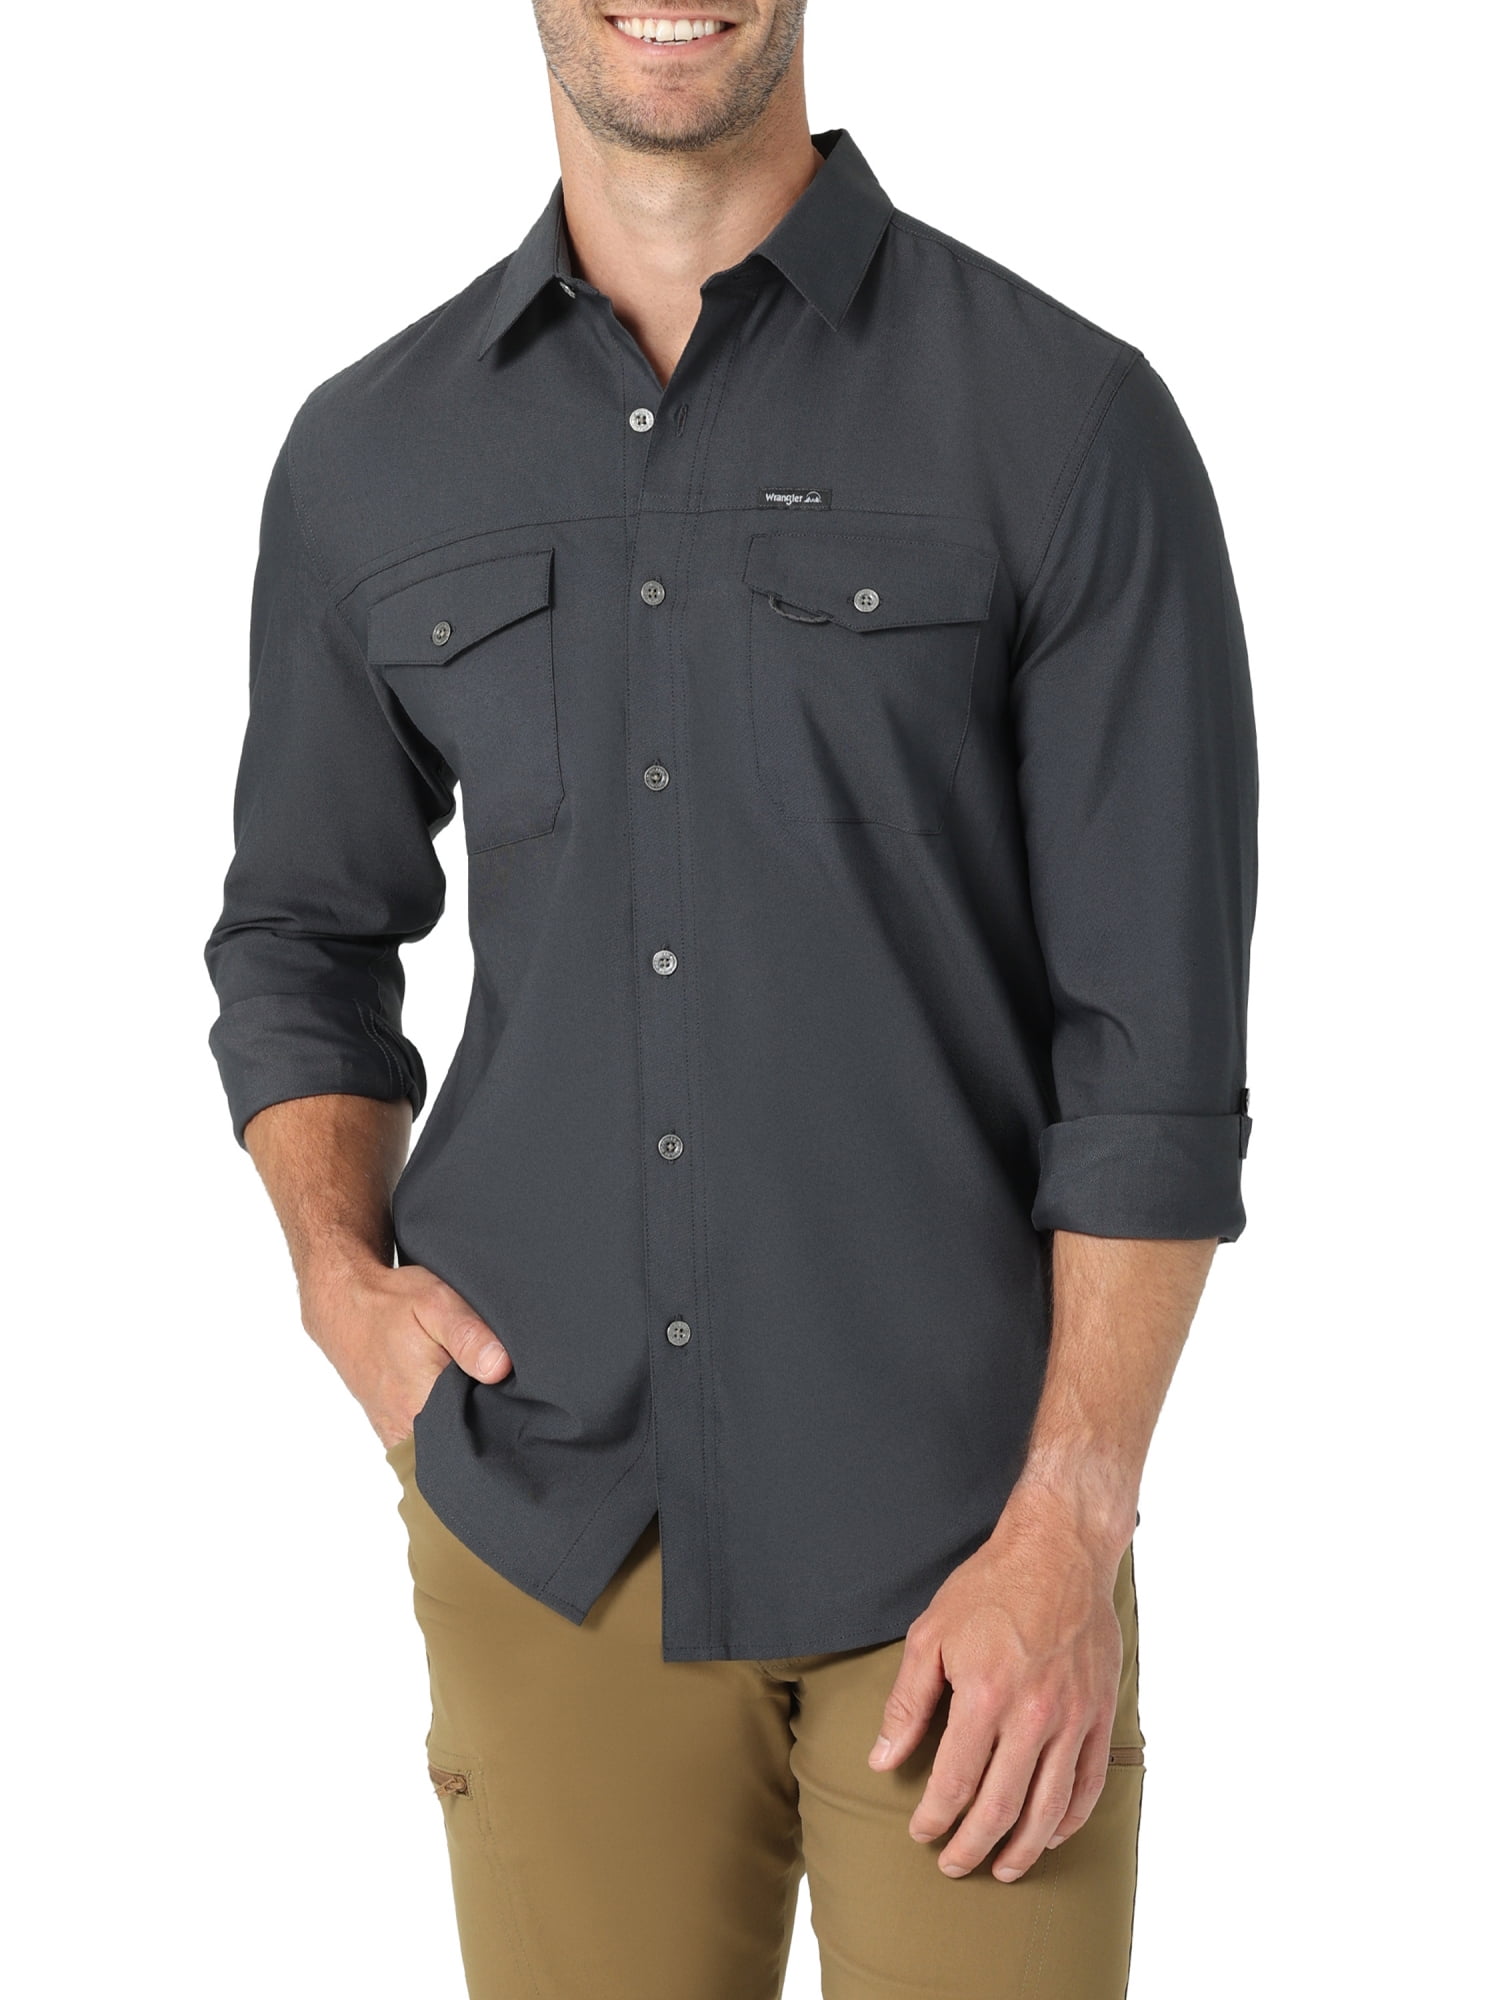 Wrangler Men's Outdoor Long Sleeve Shirt with Moisture Wicking, Sizes S-3XL    